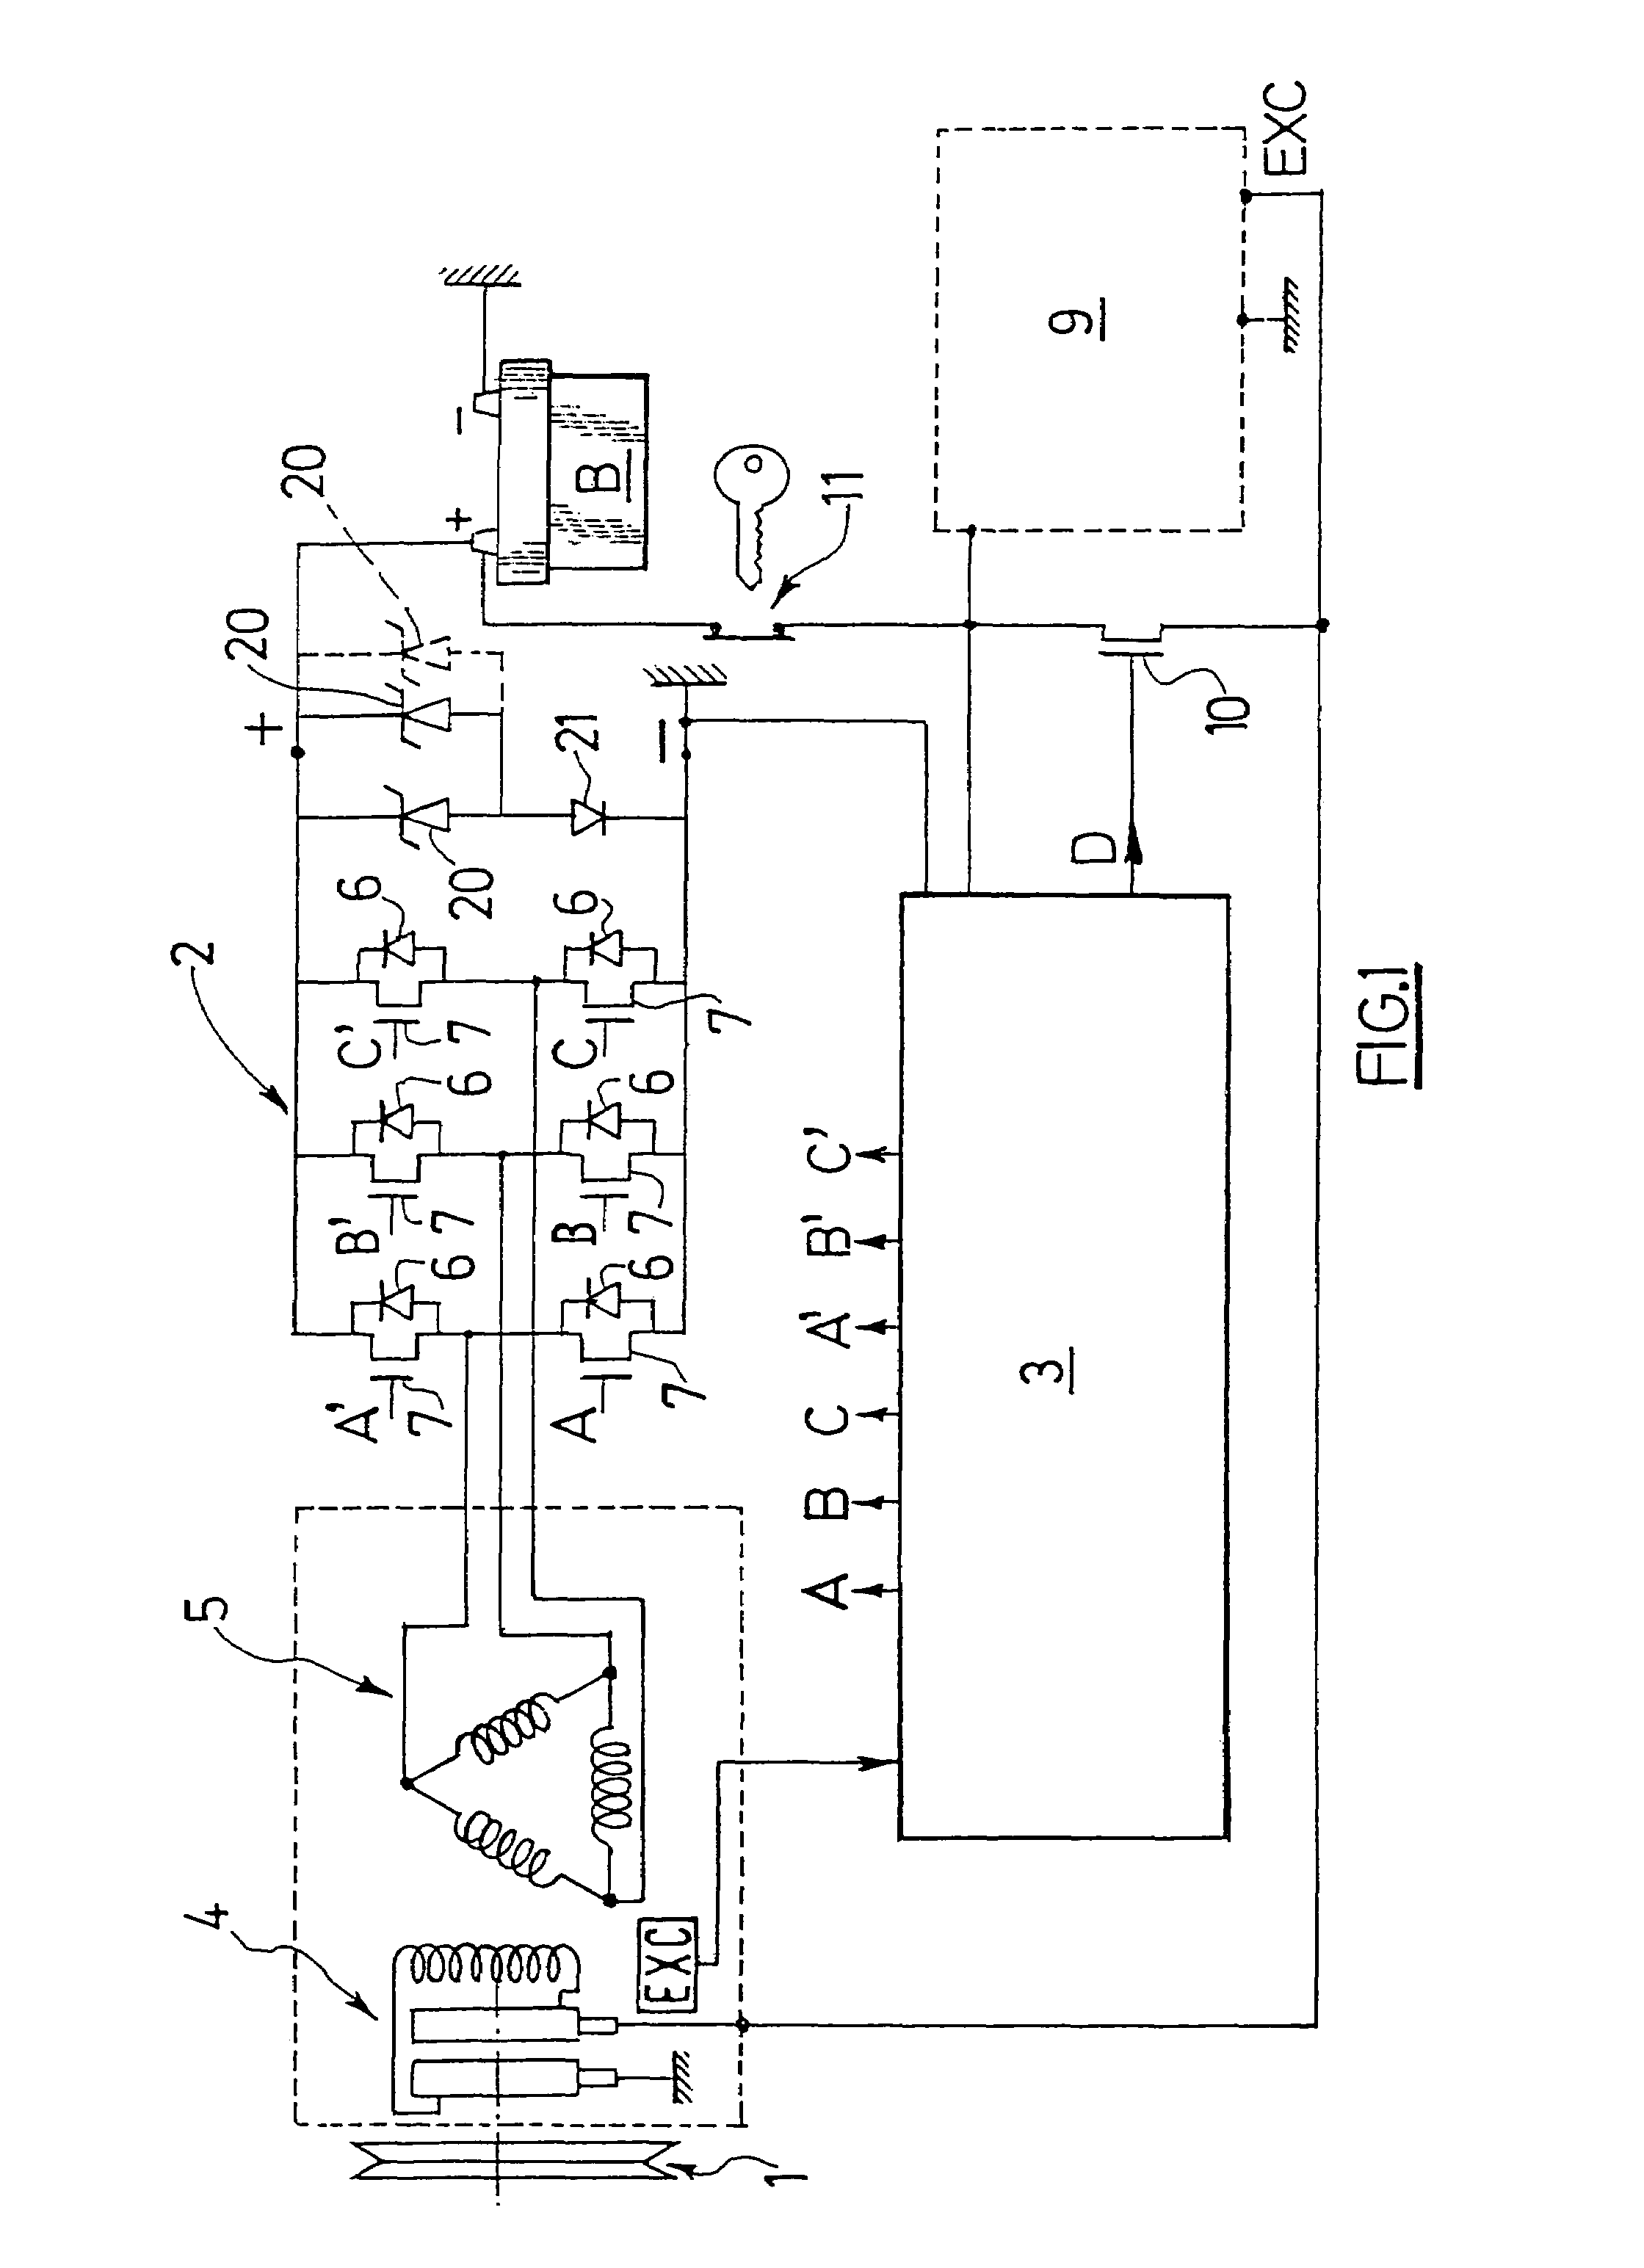 Alternator with rectifier bridge in particular for motor vehicle